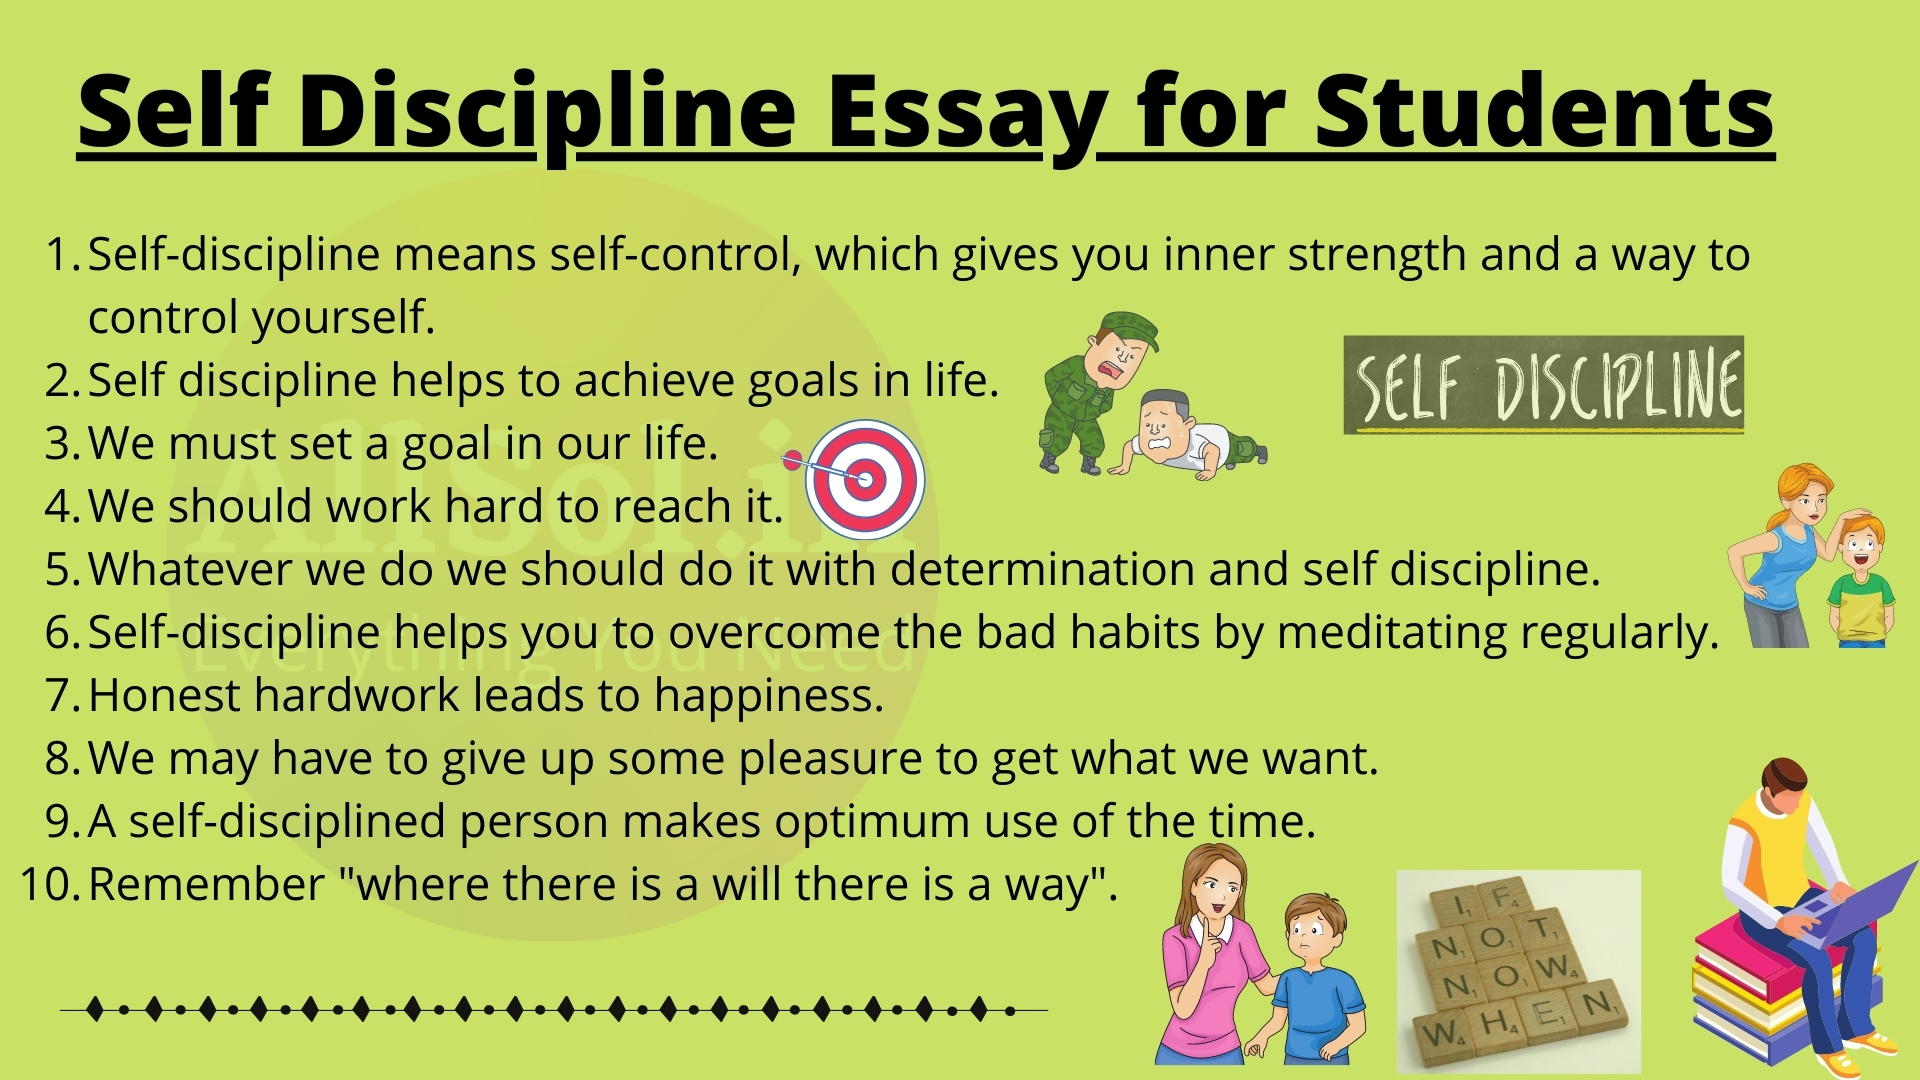 Self Discipline Essay for Students